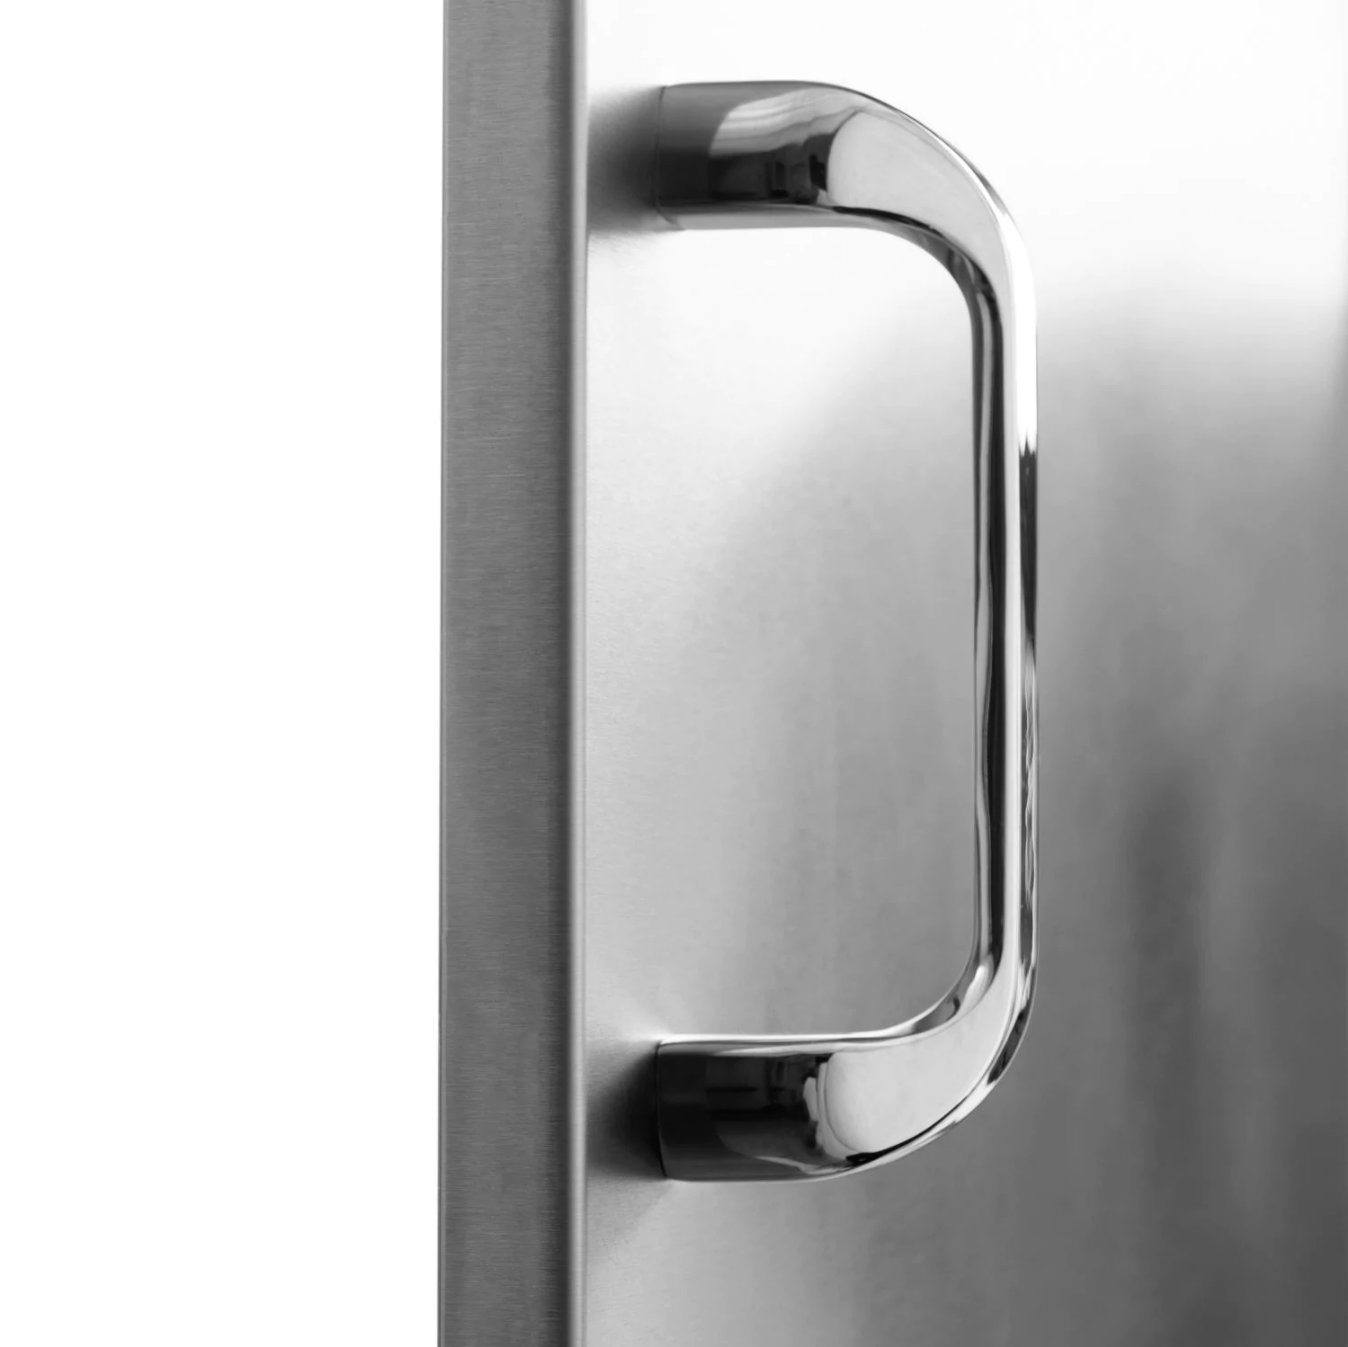 PCM 260 Series 12" Stainless Steel Reversible Single Access Door